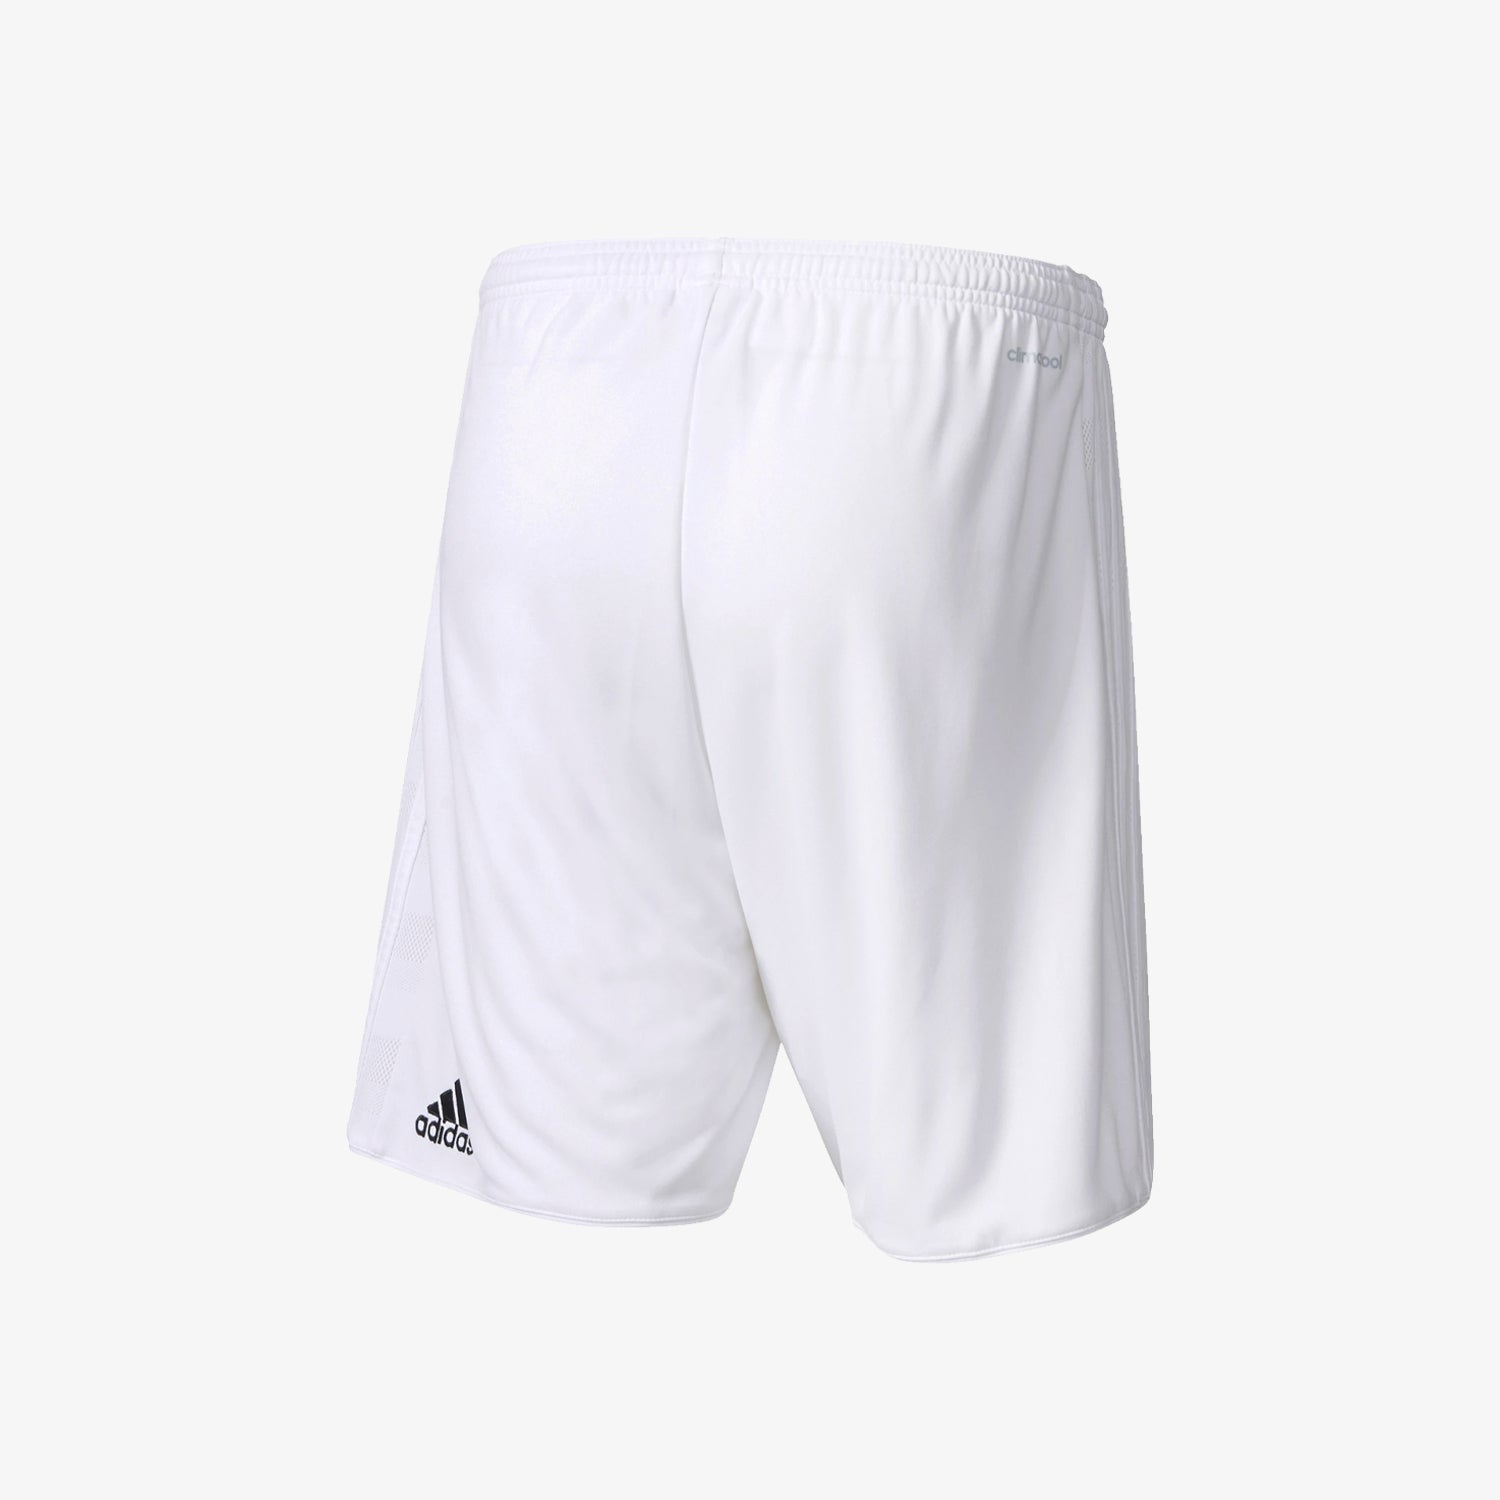 adidas men's white soccer shorts